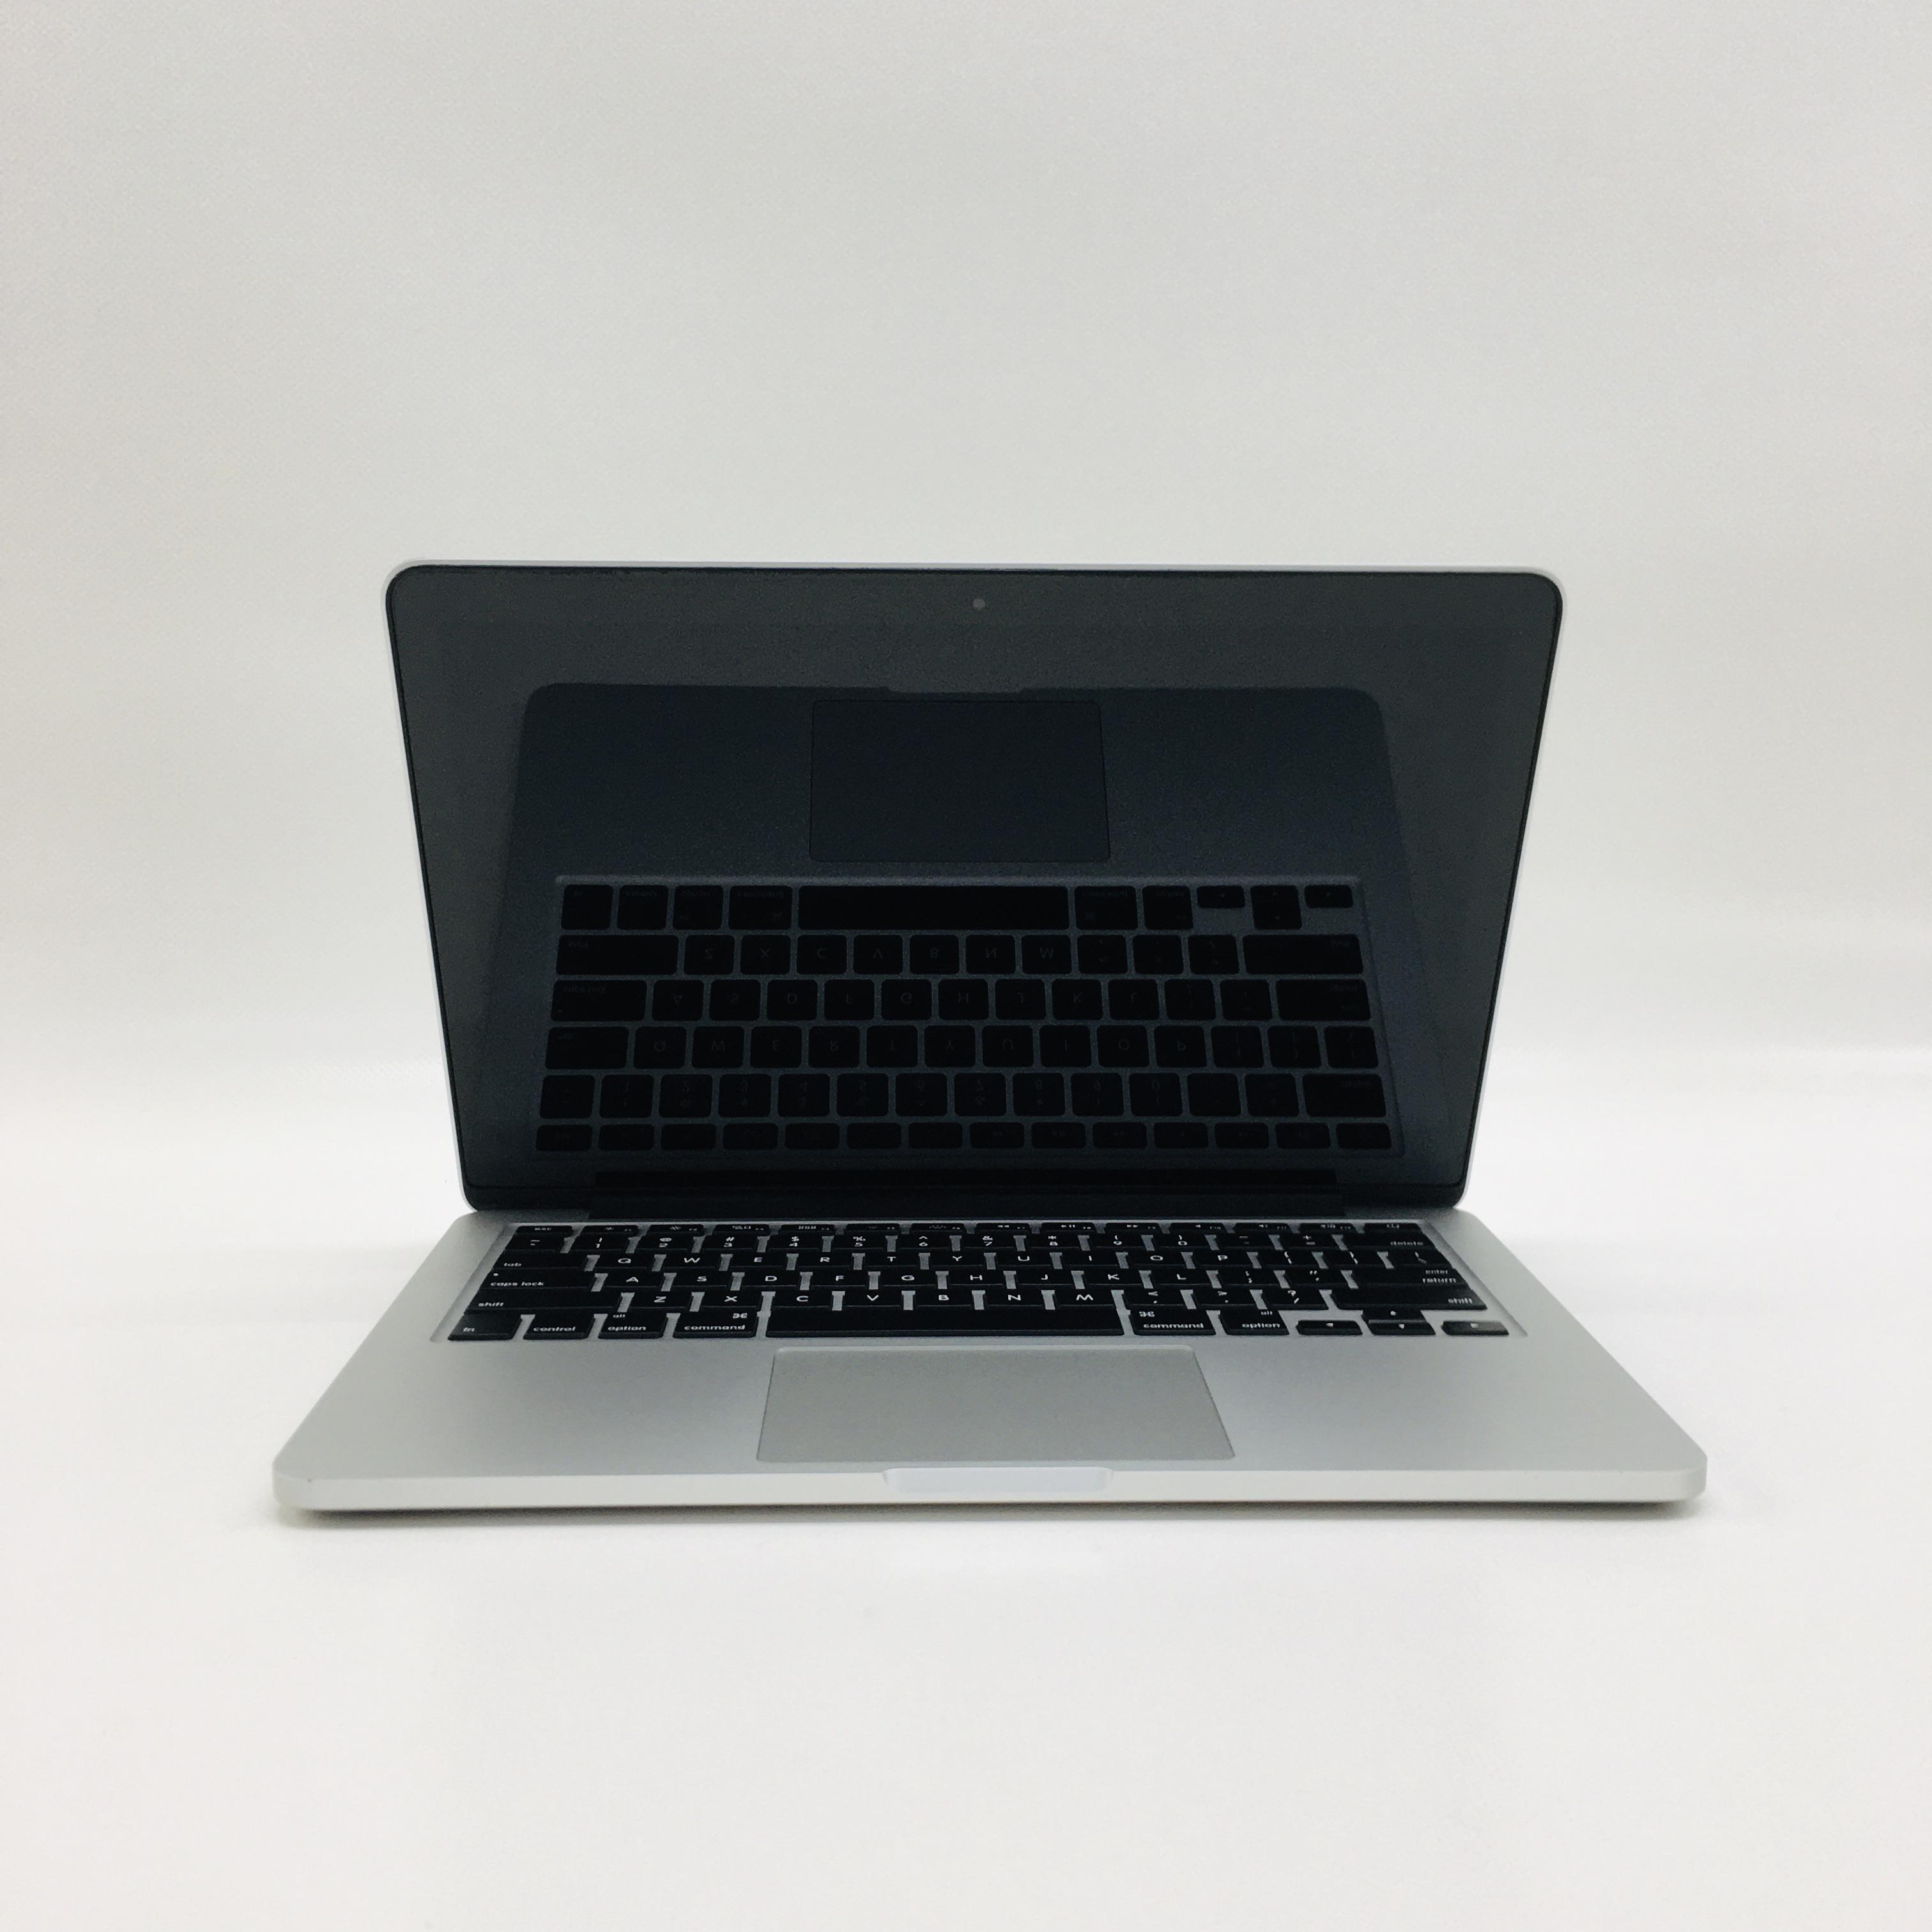 MacBook Pro Retina 13" Early 2015 (Intel Core i5 2.7 GHz 8 GB RAM 256 GB SSD), Intel Core i5 2.7 GHz, 8 GB RAM, 256 GB SSD, image 1